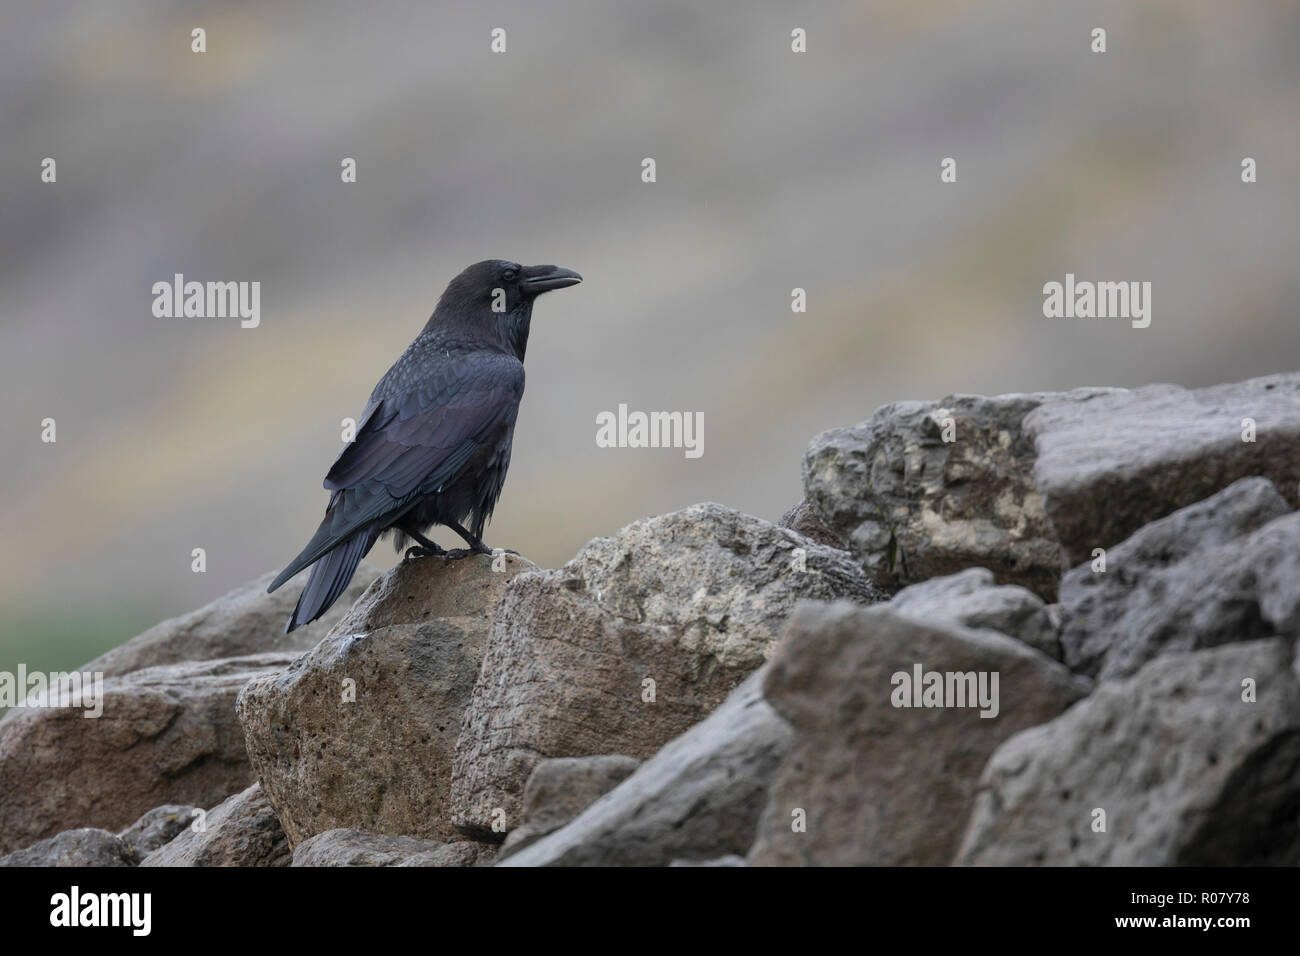 Kolkrabe, Kolk-Rabe, Kolk, Rabe, Corvus corax, common raven, northern raven, raven, Le Grand Corbeau Stock Photo